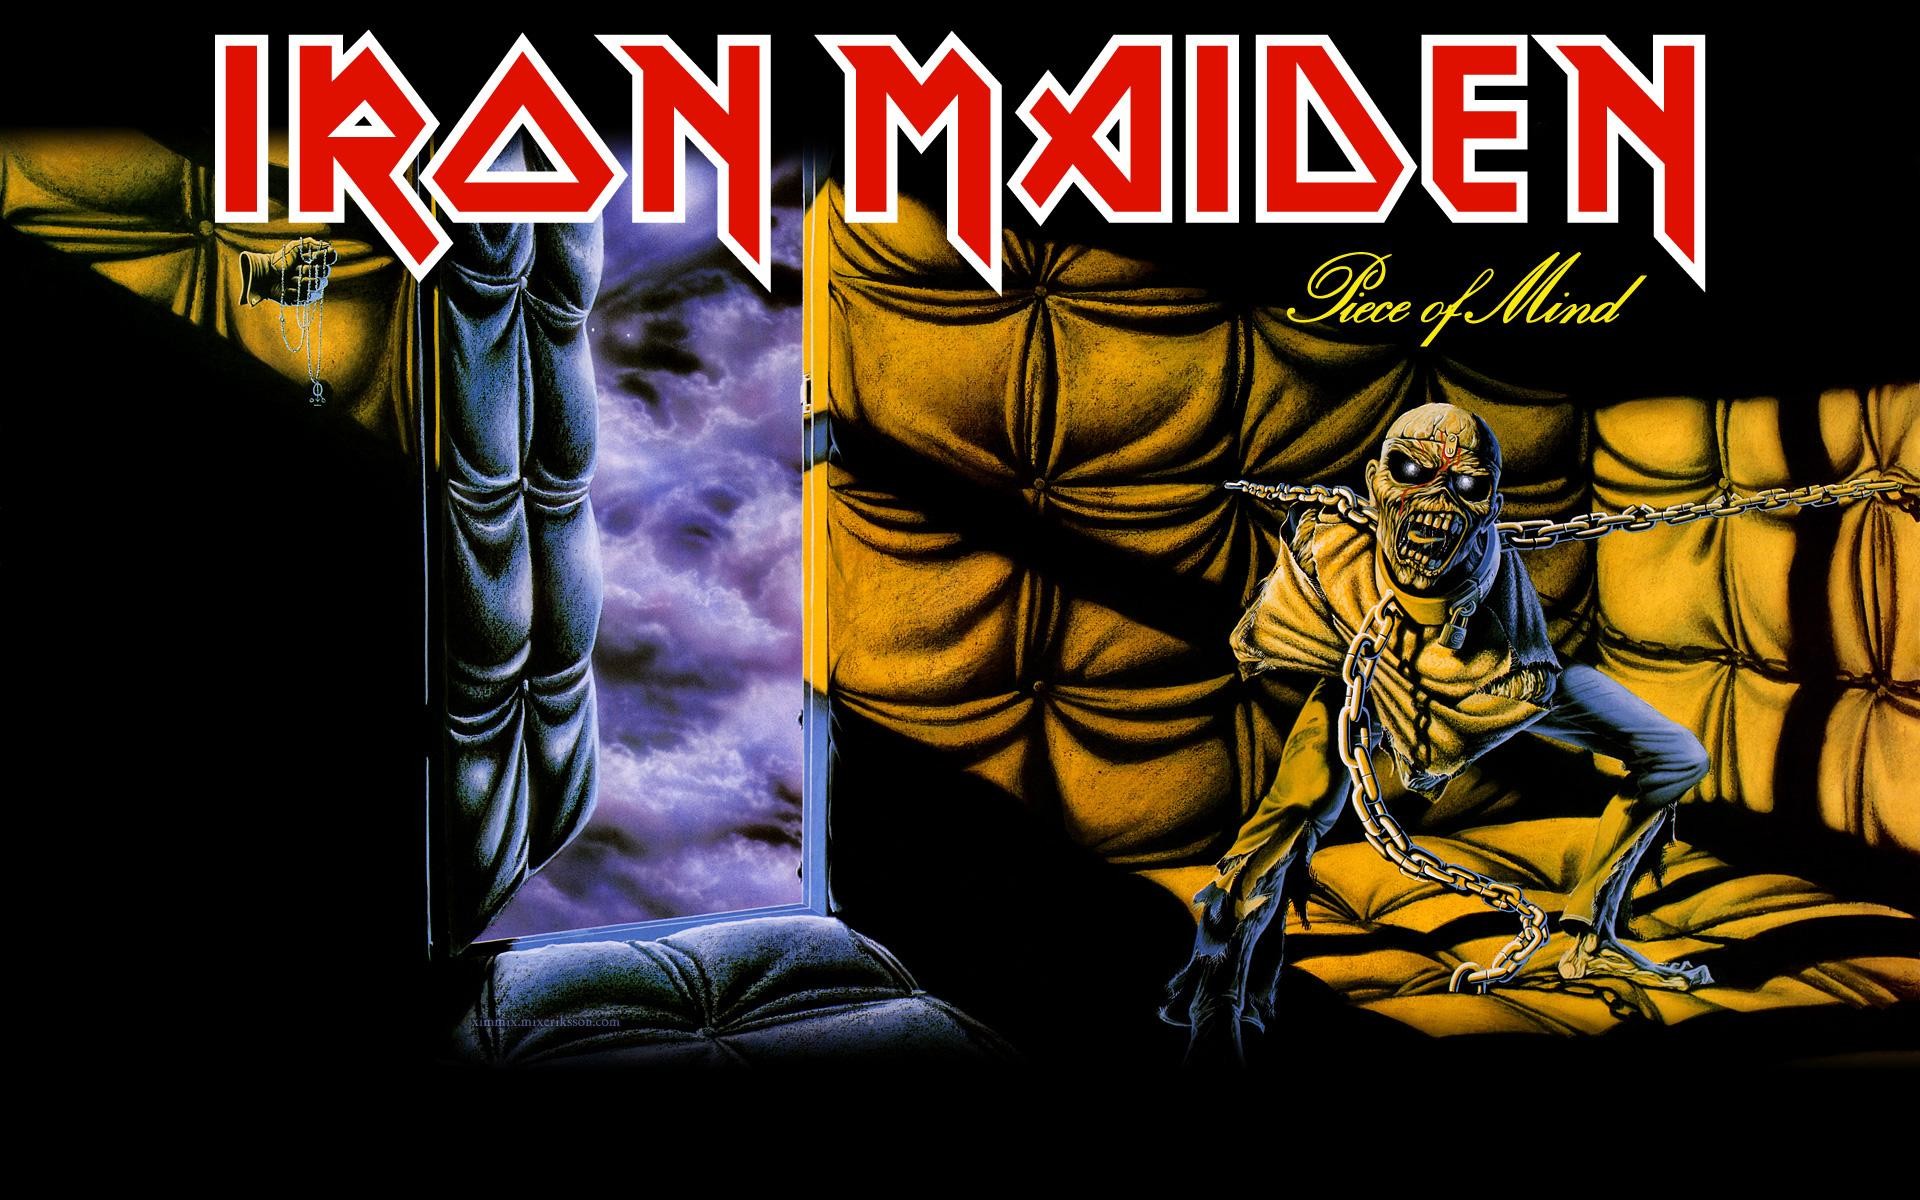 Айрон мейден лучшие песни. Iron Maiden piece of Mind 1983. Постеры группы Iron Maiden. Эдди 1983 Iron Maiden. Айрон мейден плакаты.